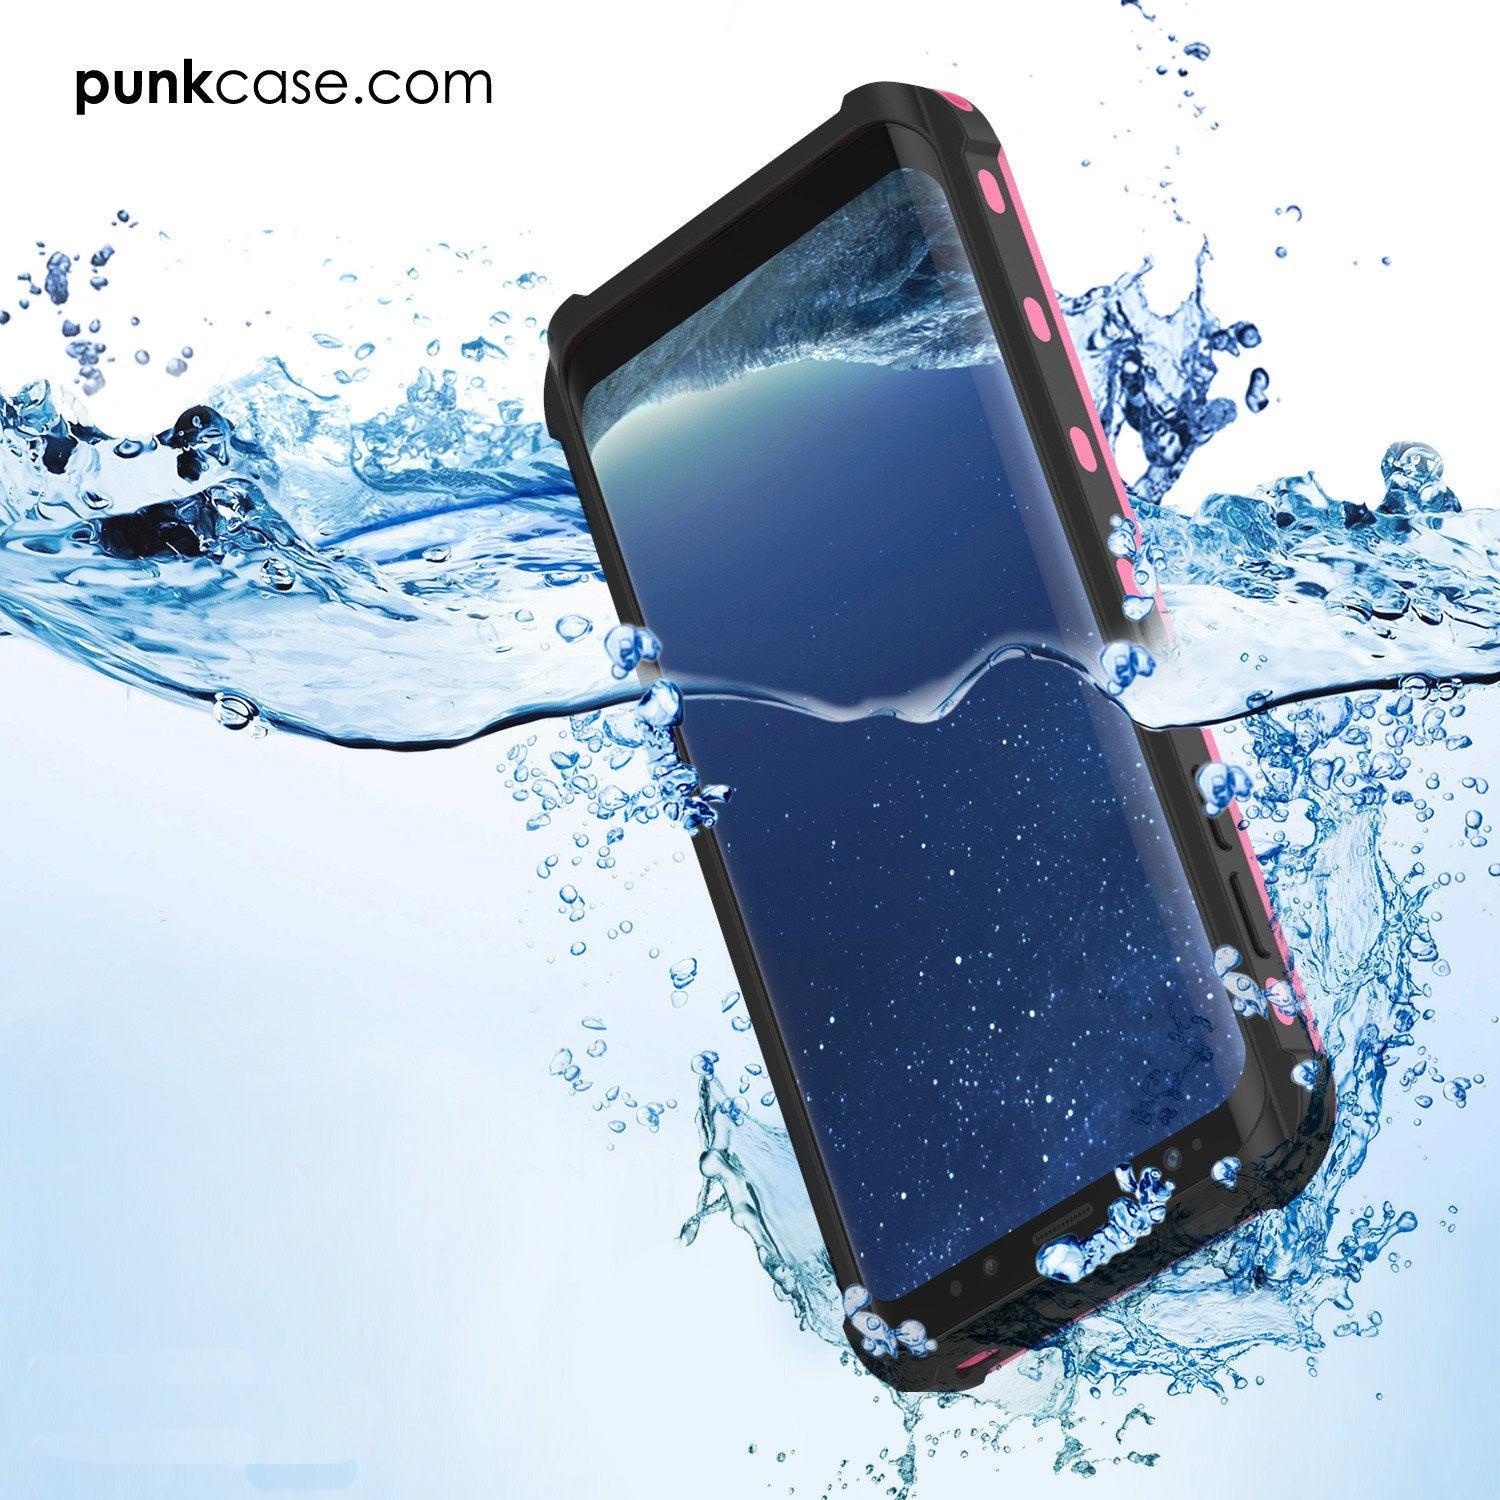 Galaxy S8 Plus Waterproof Shock/Snow Proof Case [Pink]